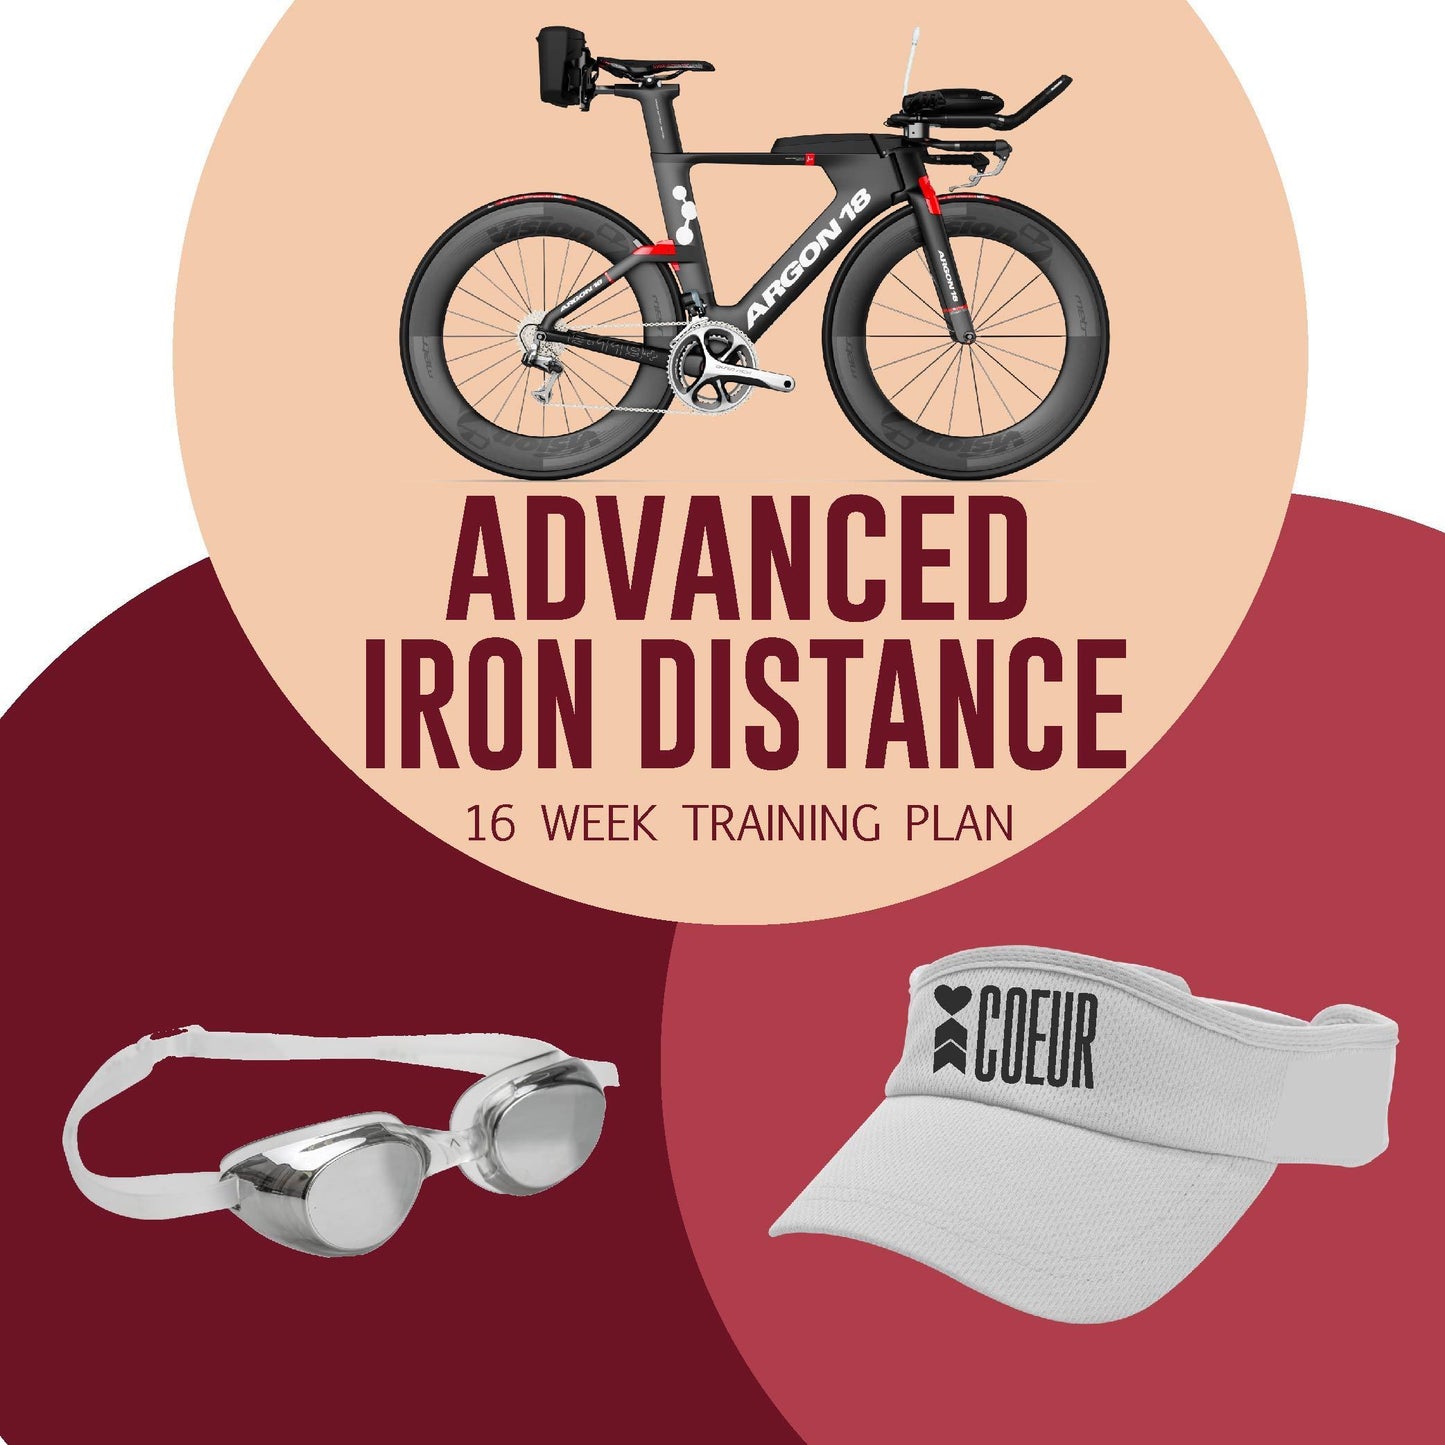 Iron Distance Triathlon Training Plan: Women's 16 Week